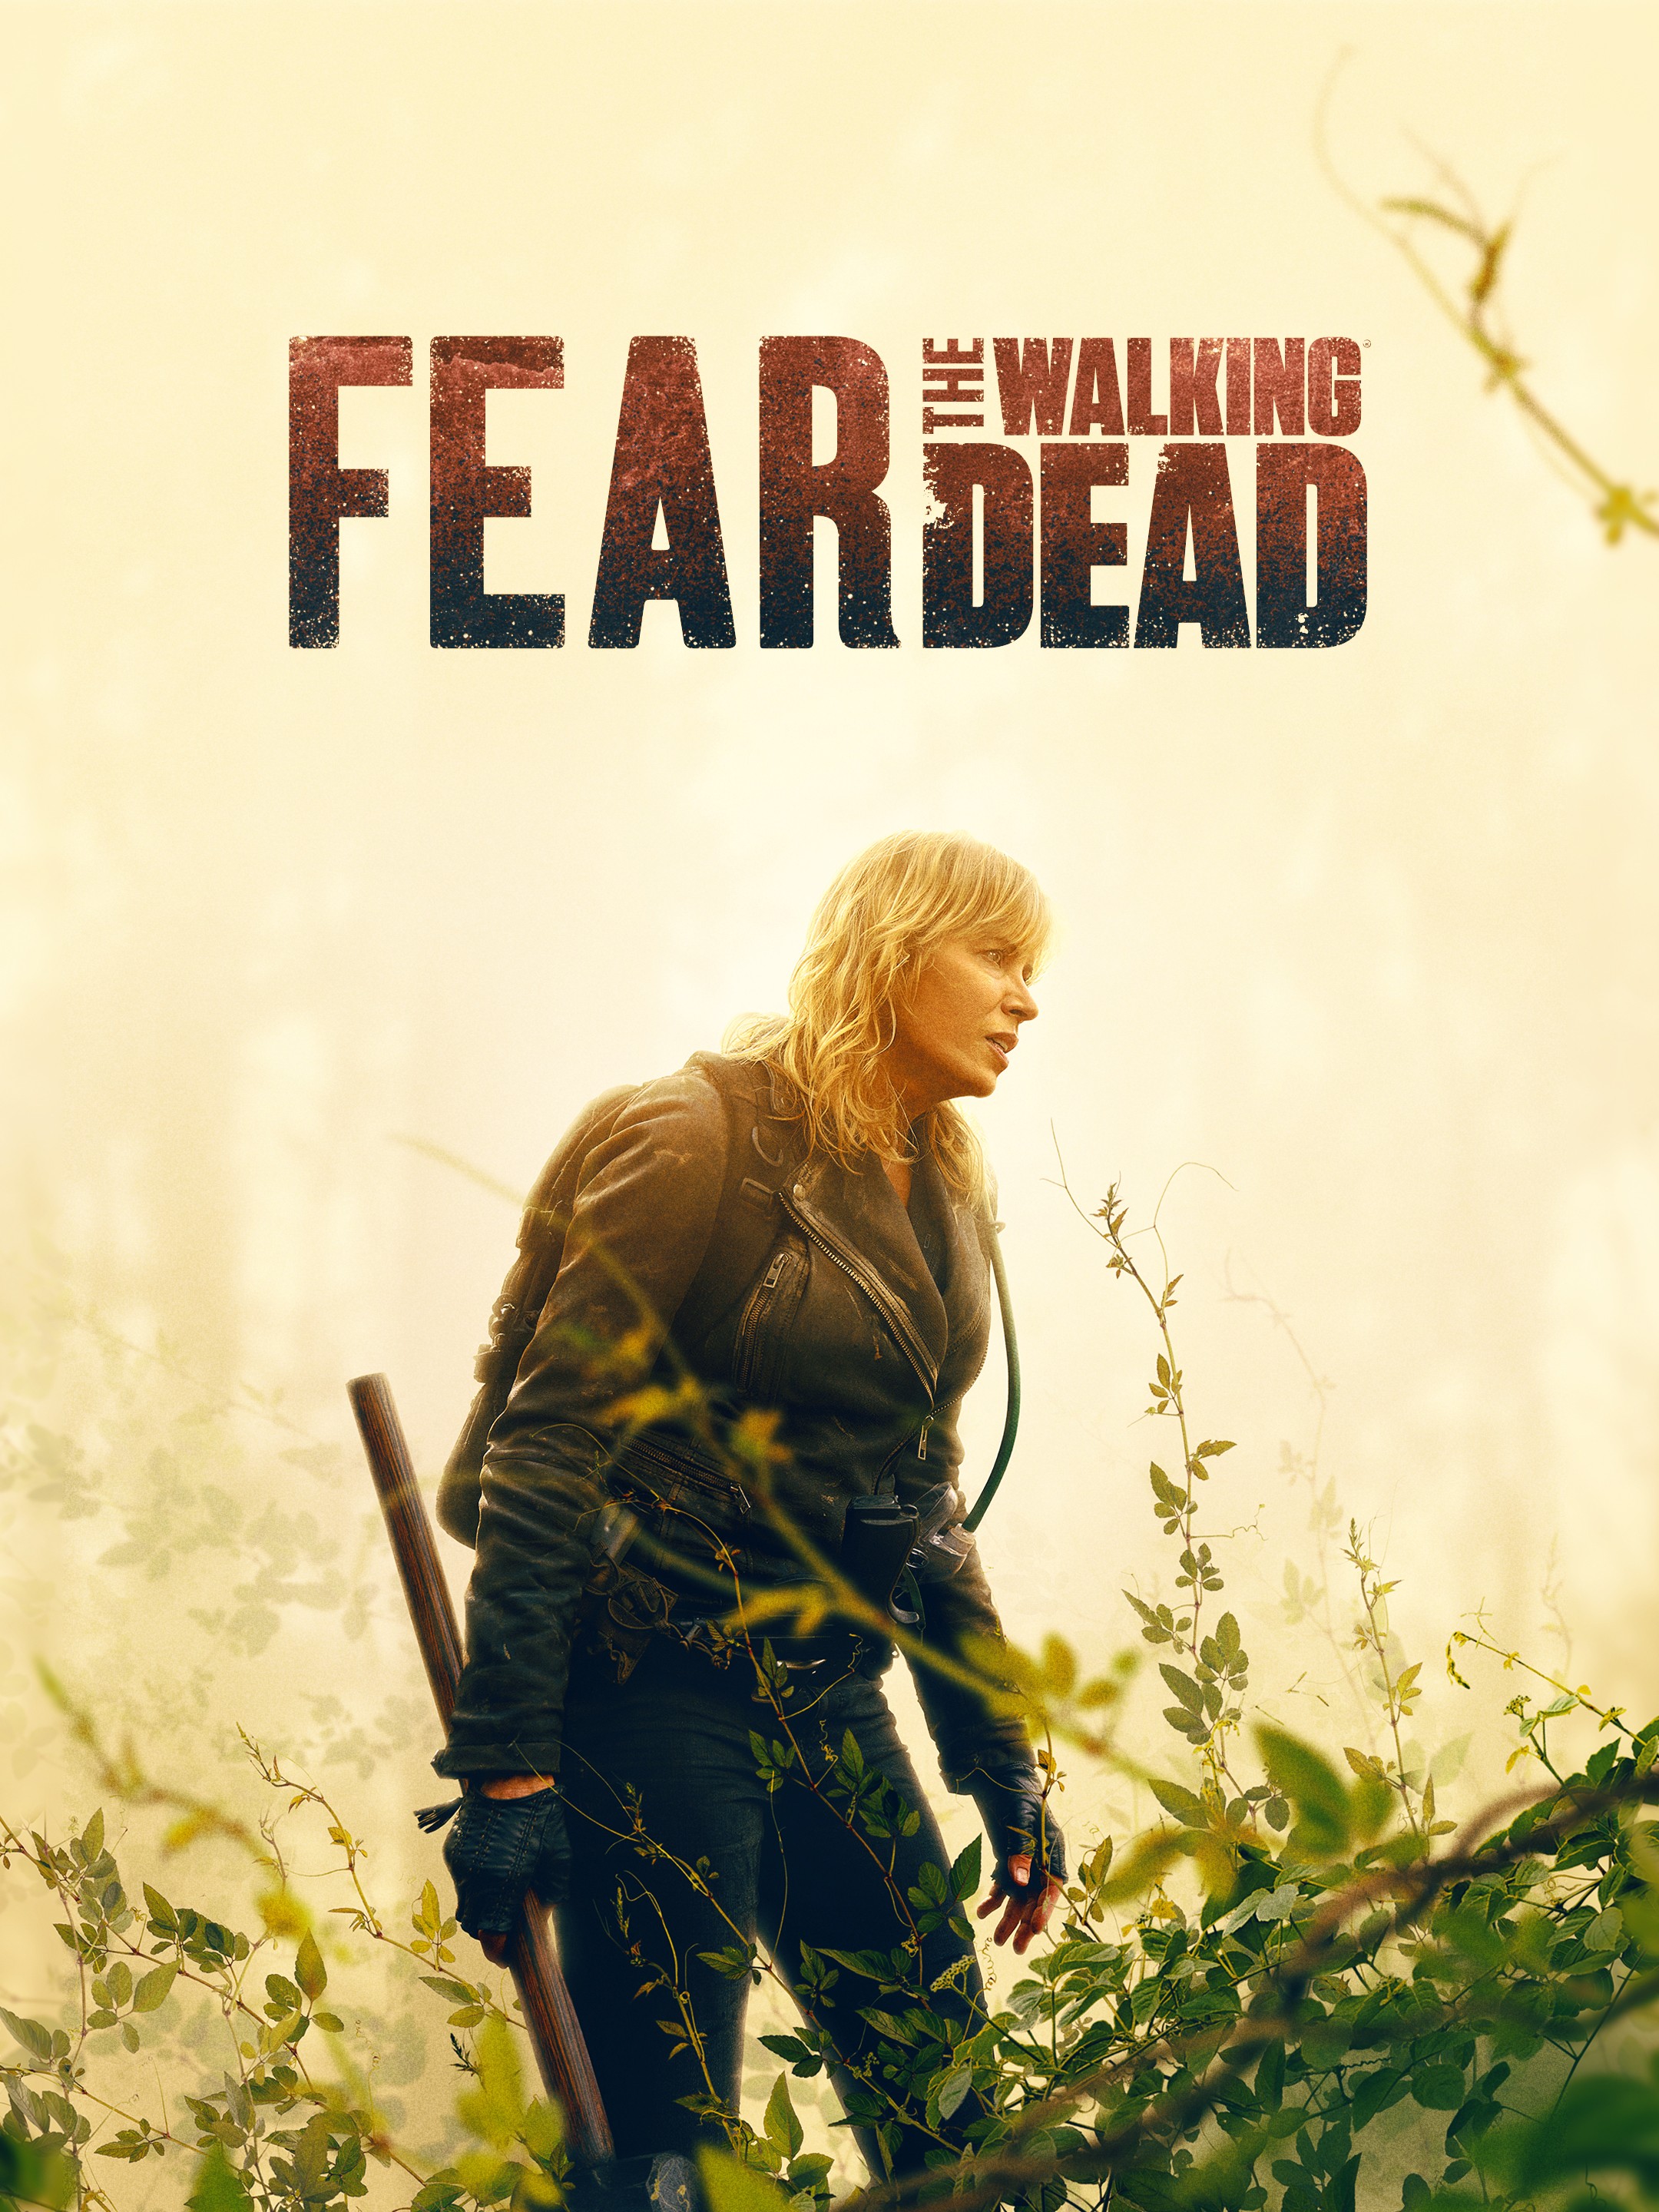 The Walking Dead Season 5 Poster Survive